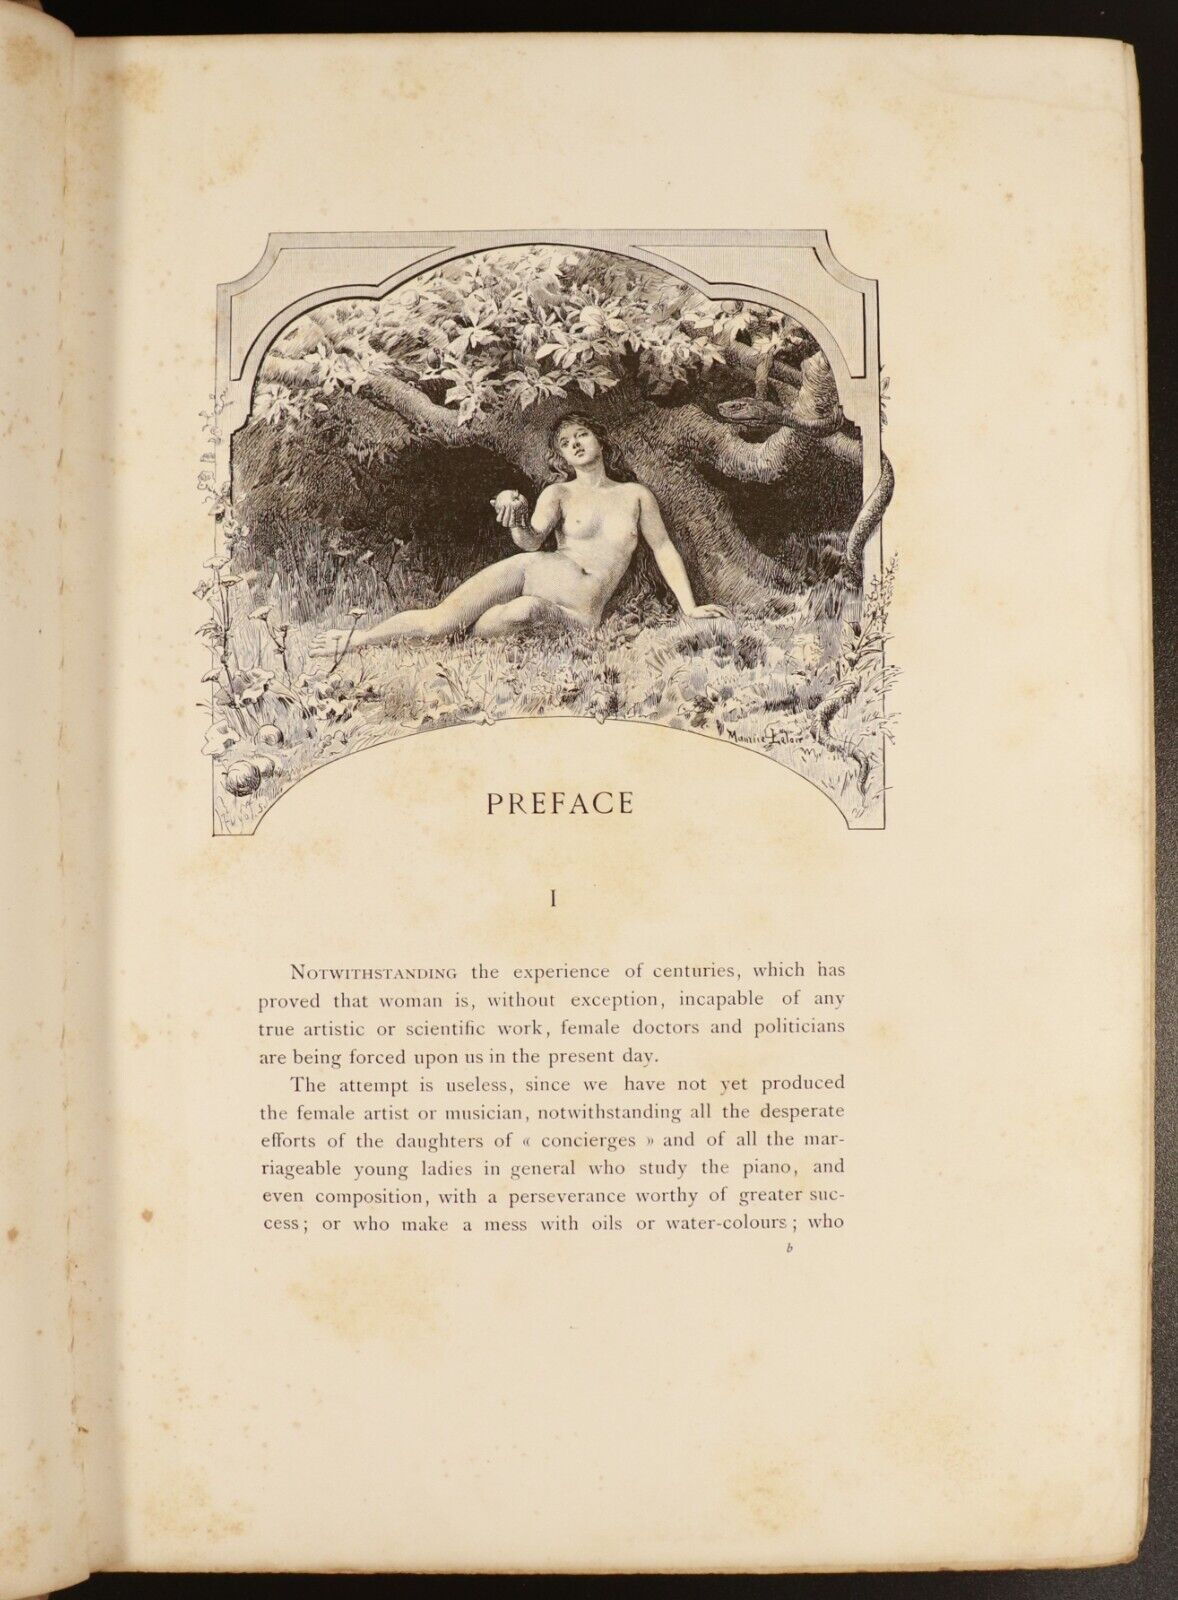 1890 History Of Manon Lescaut by The Abbe Prevost Antique Art & History Book